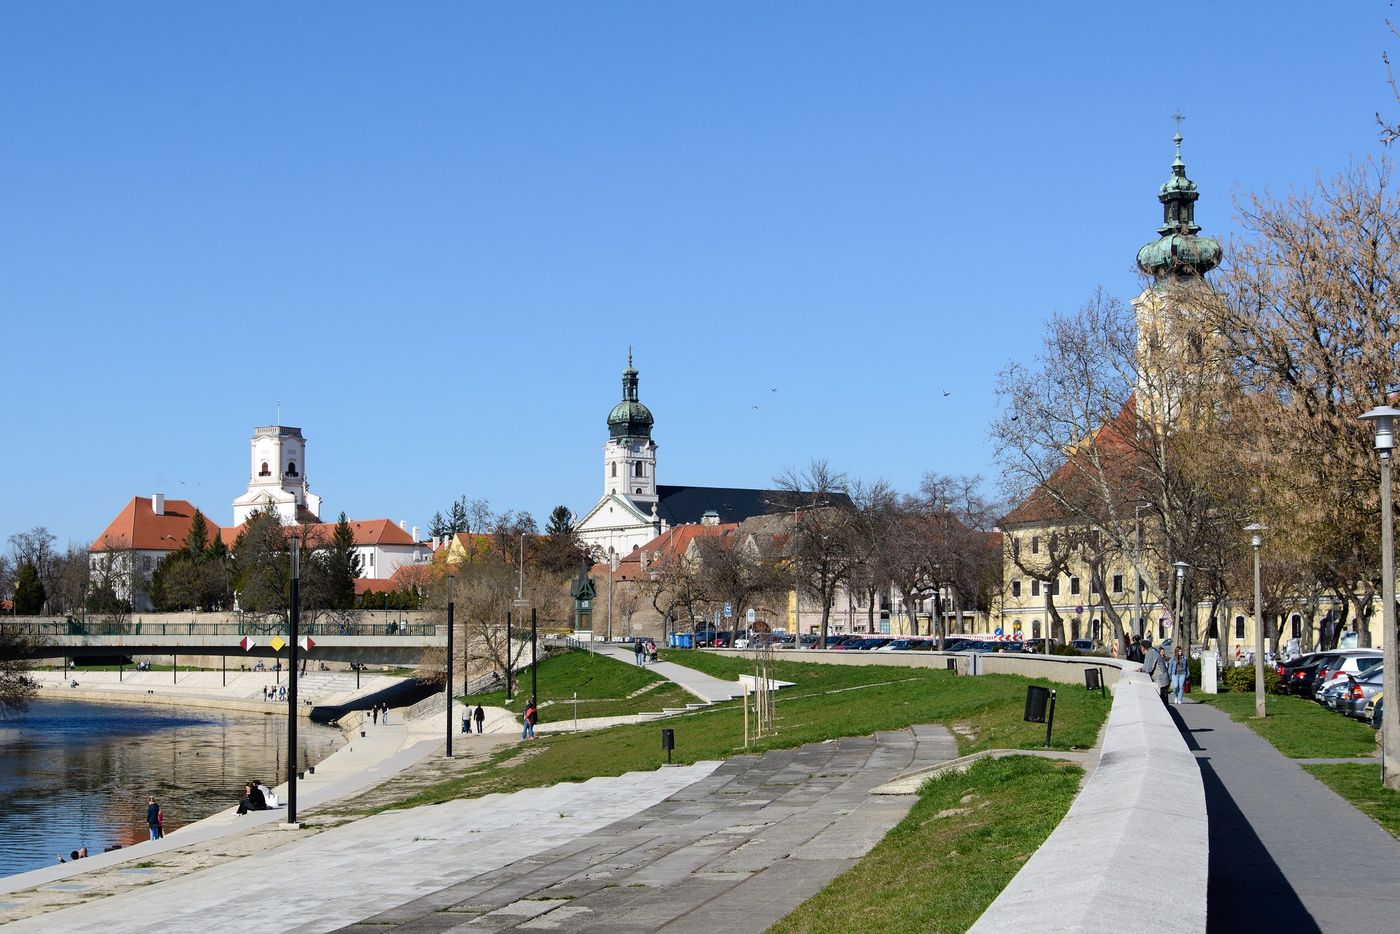 Győr: Kur istorija susitinka su modernumu